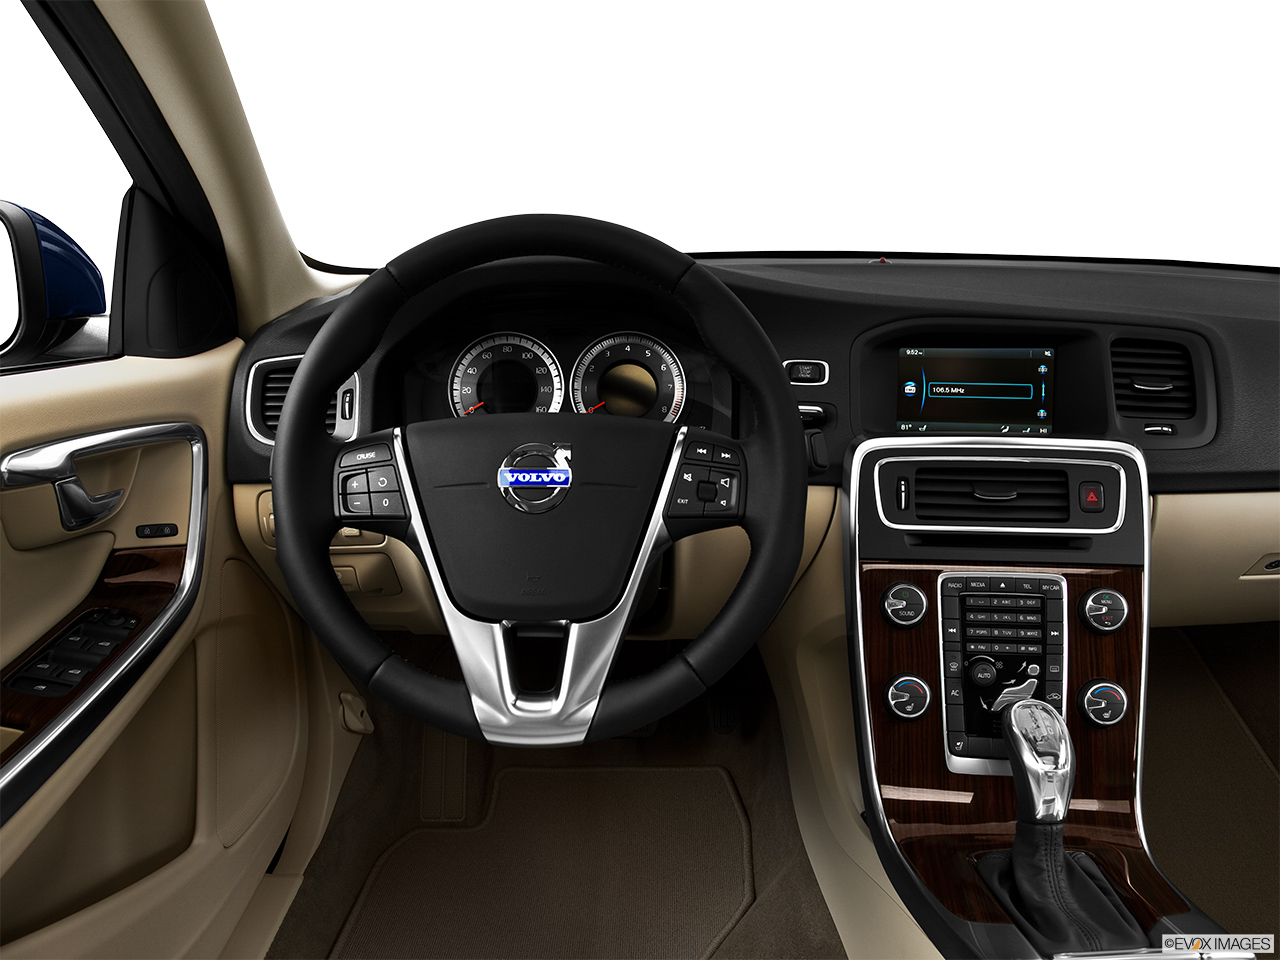 2013 Volvo S60 T5 FWD Premier Steering wheel/Center Console. 